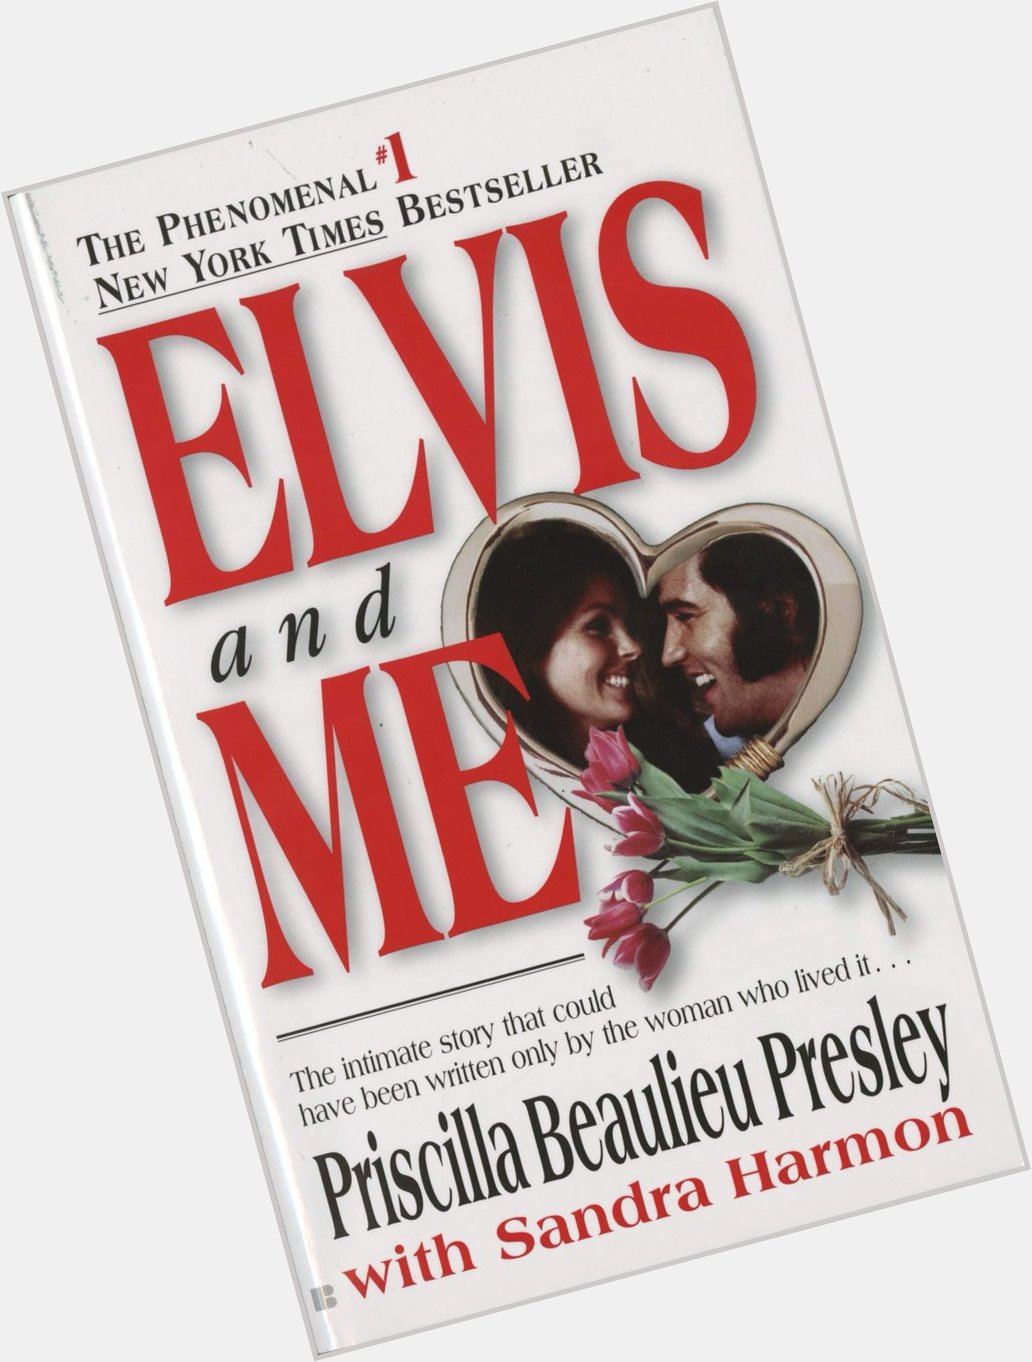 Happy Birthday, Priscilla Presley! ELVIS & ME is one of our top episodes! 